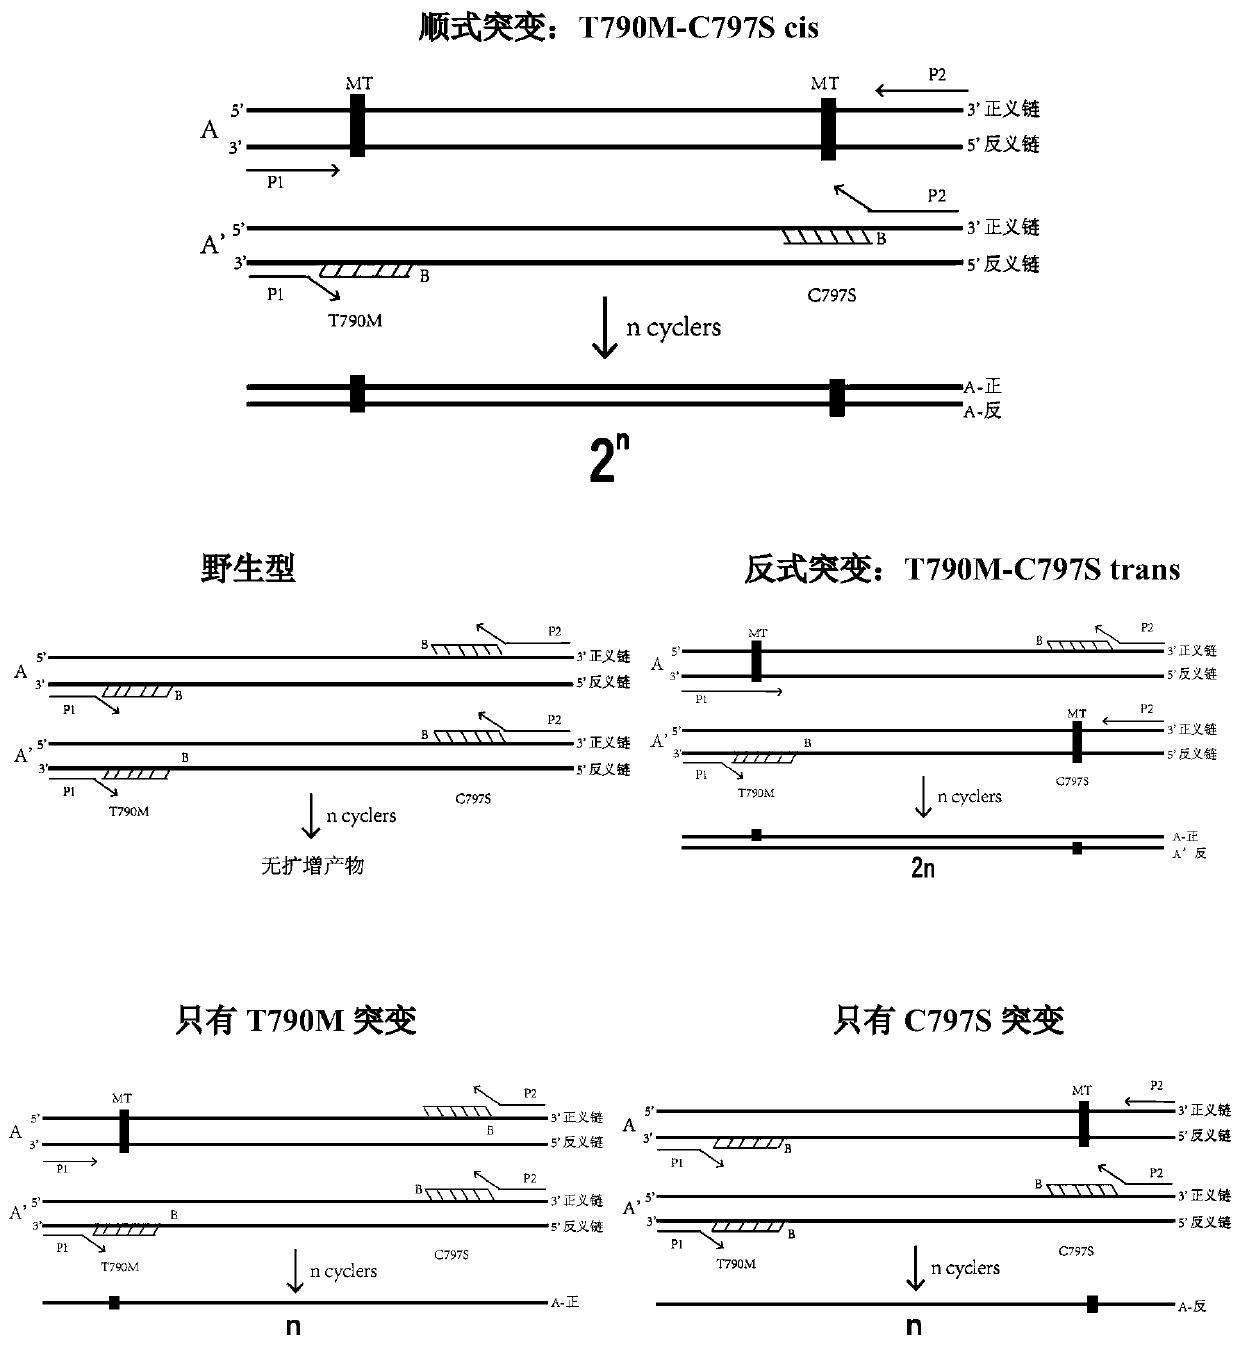 Detection method of EGFR T790M and C797S cis mutation